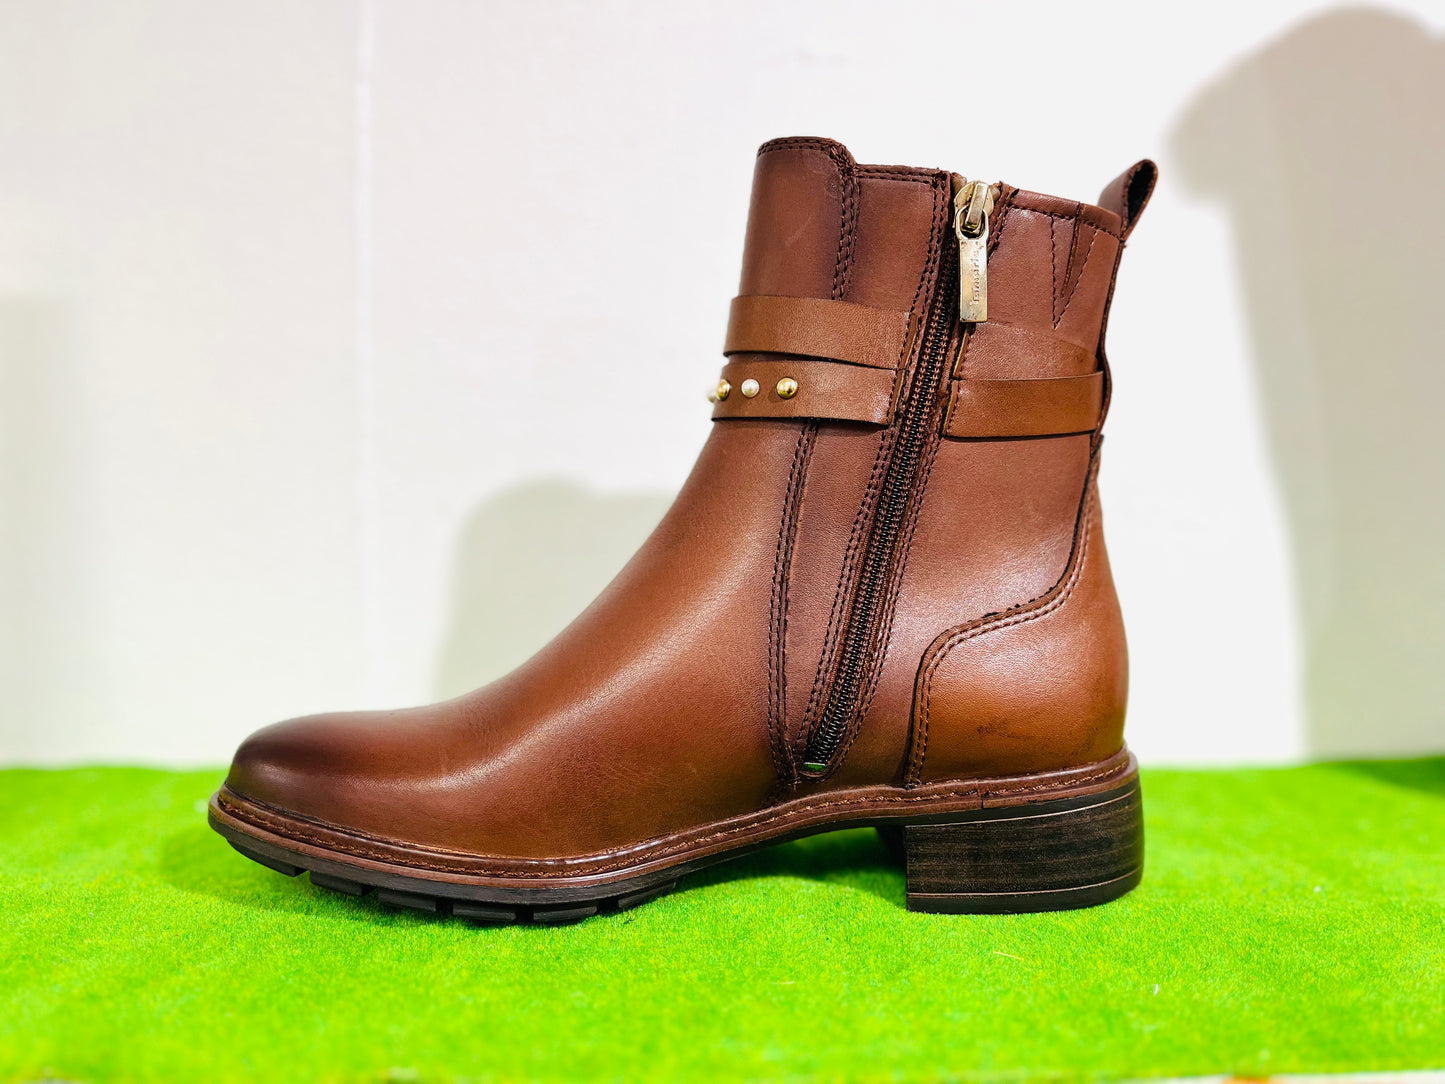 Tamaris ankle boot 25052 tan leather